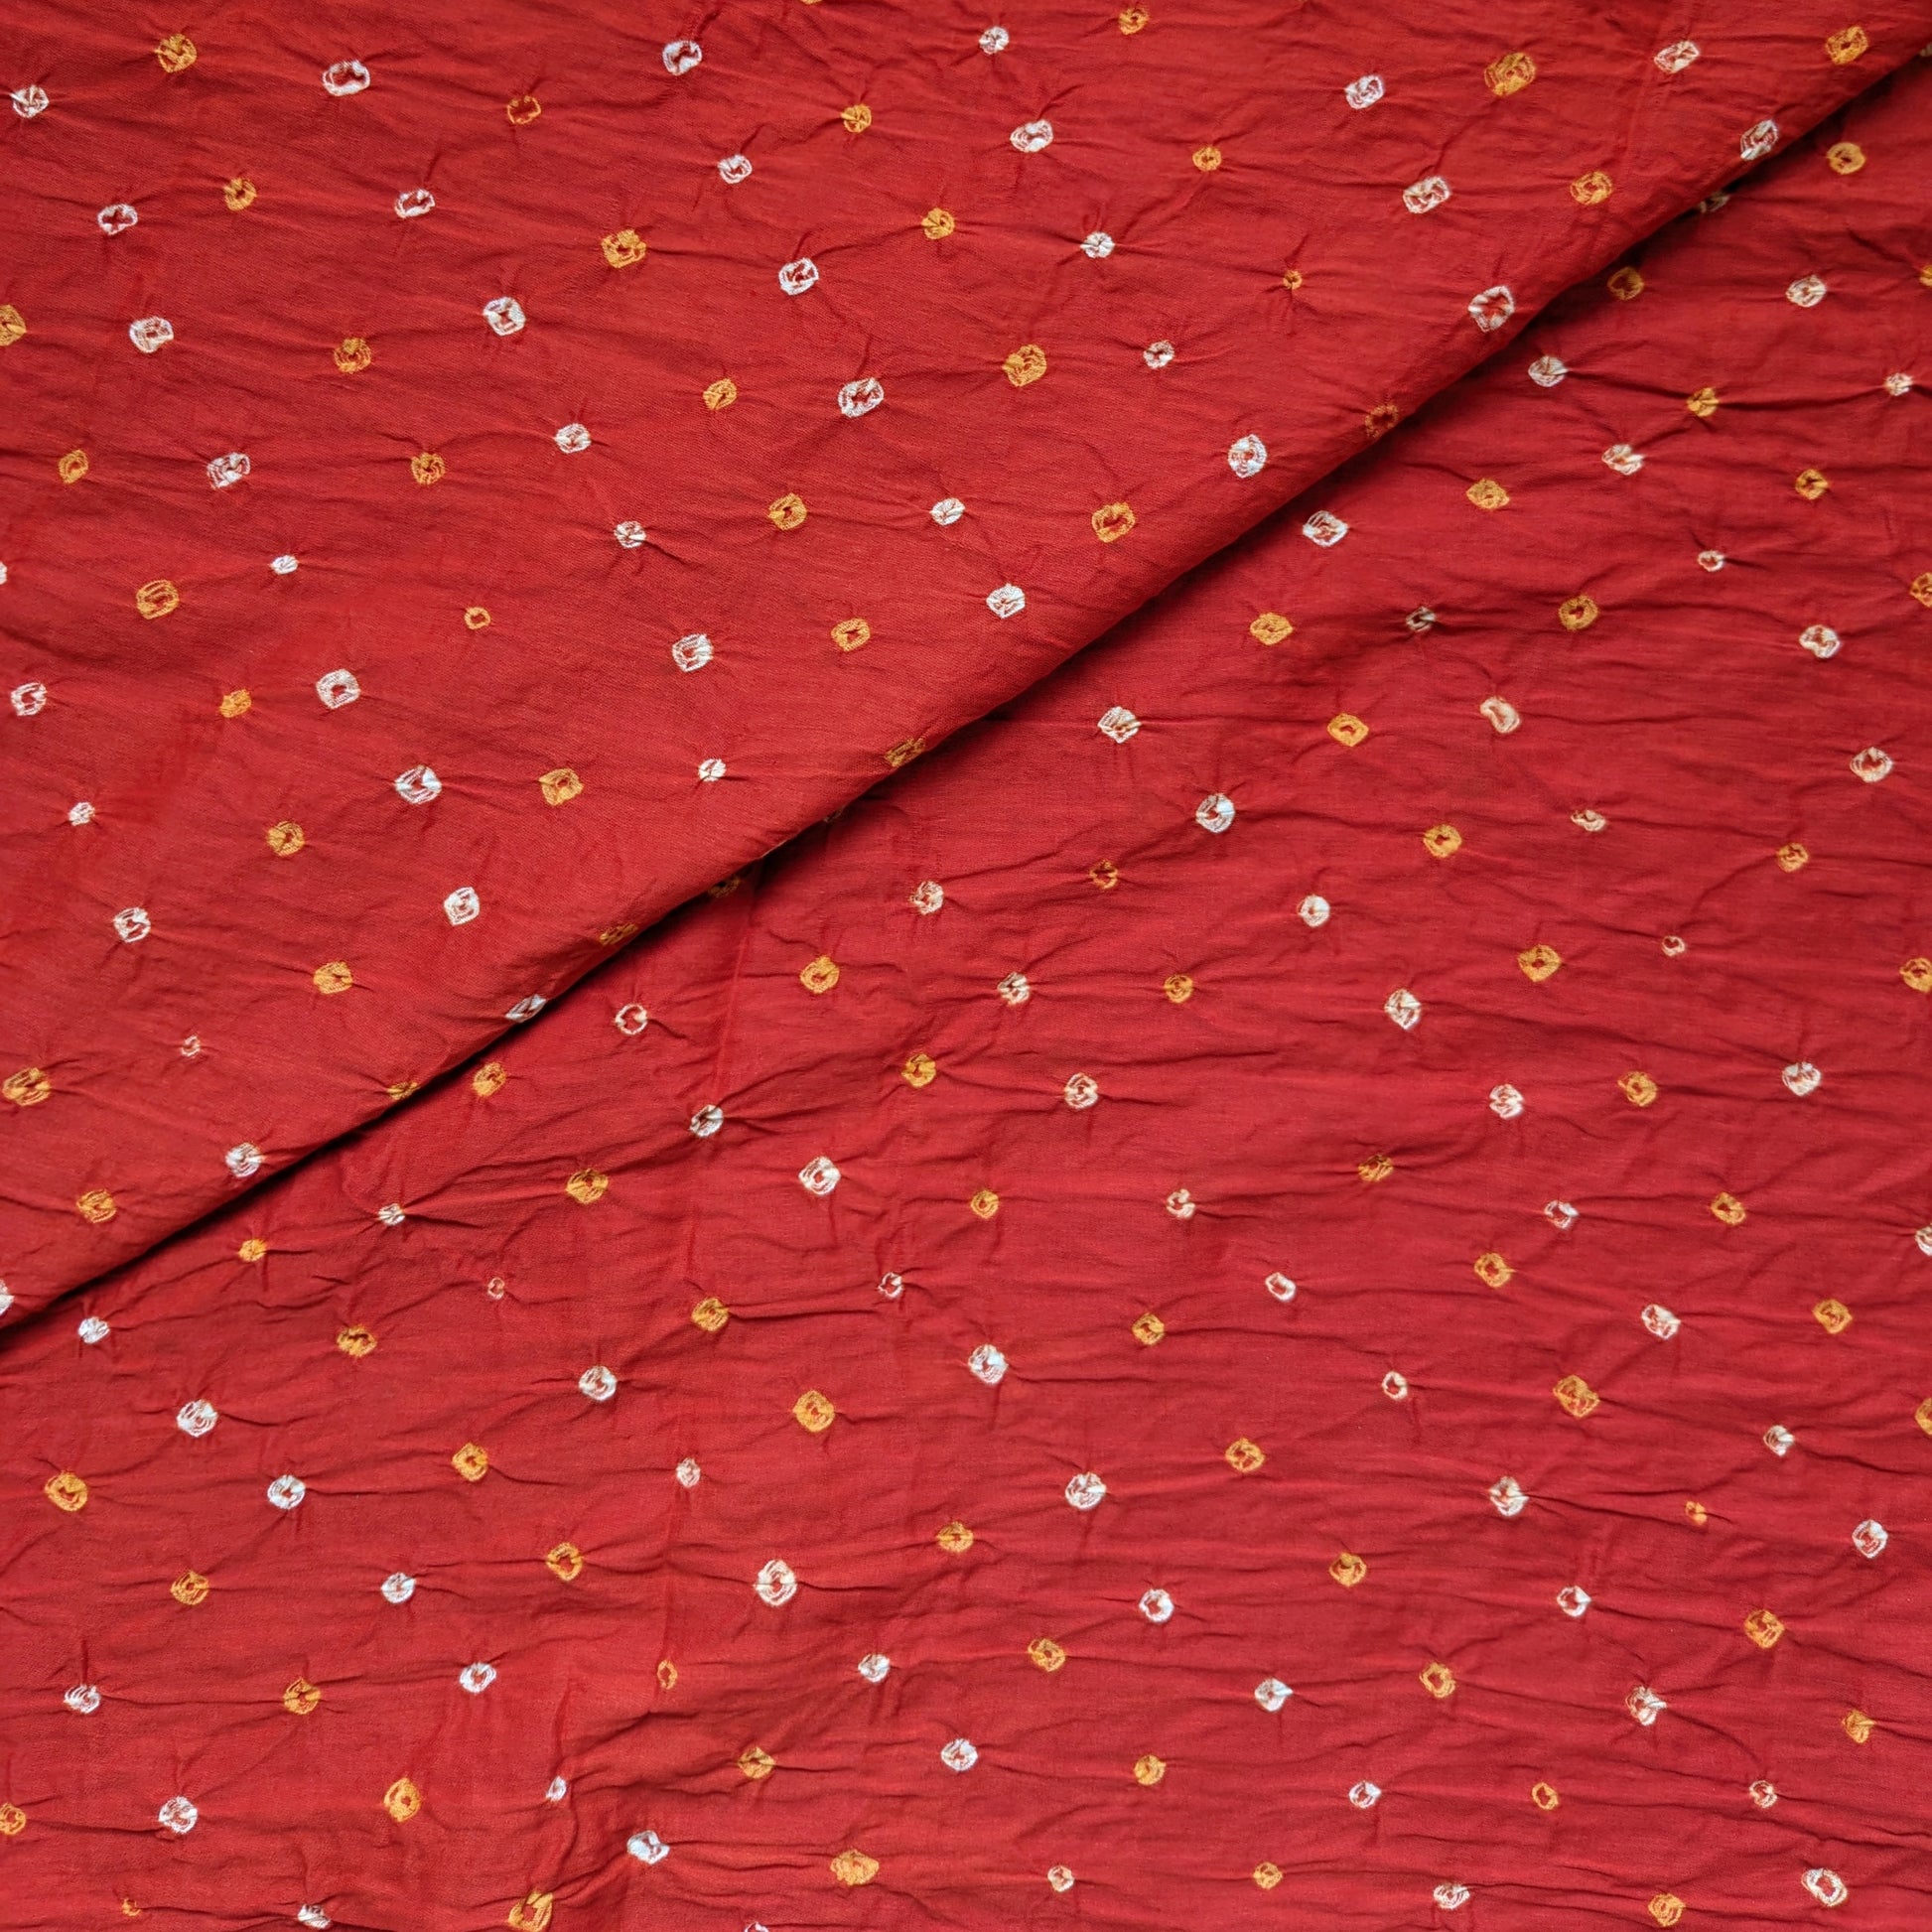 Cotton Satin Finish Tie-Dye Bandhani Fabric